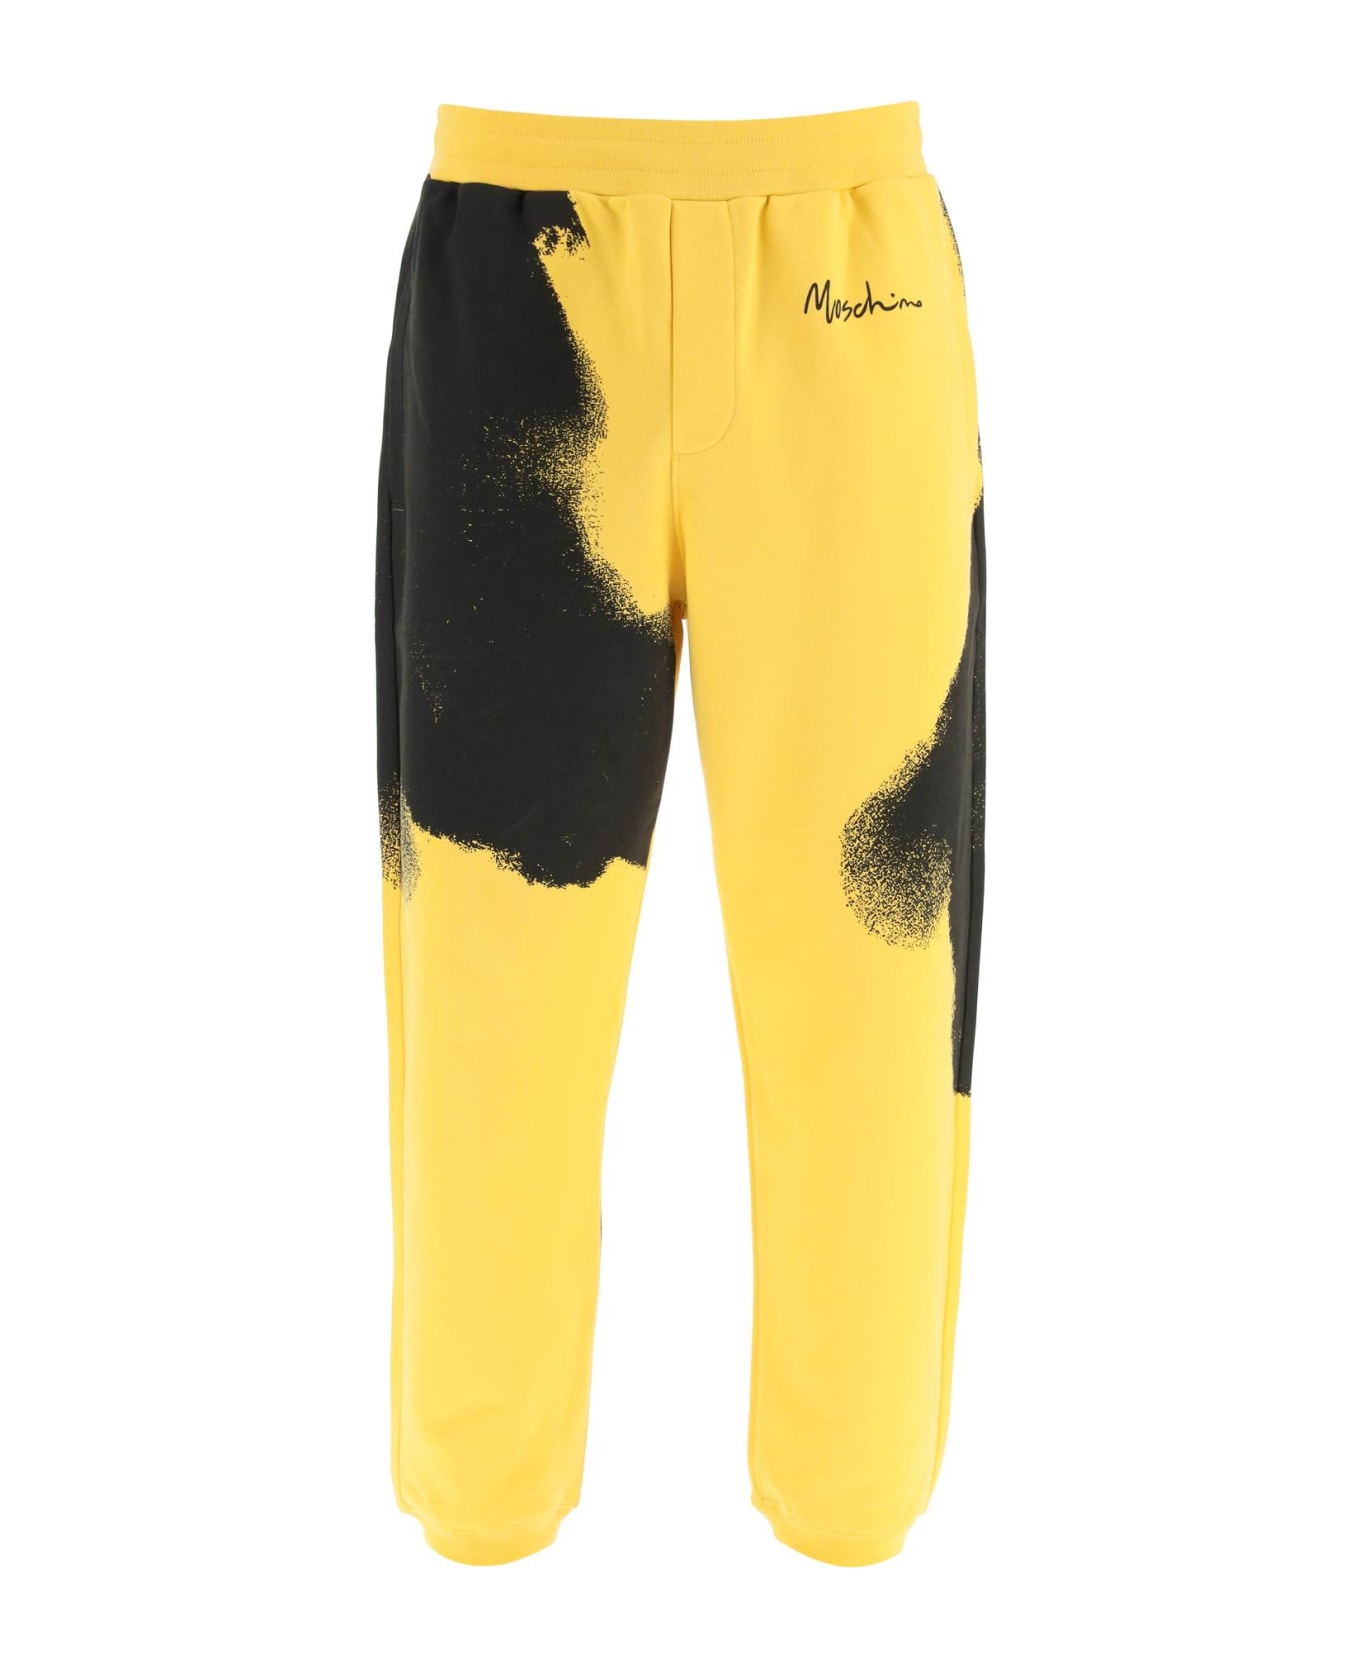 Moschino Graphic Print Jogger Pants With Logo - FANTASIA GIALLO (Yellow)